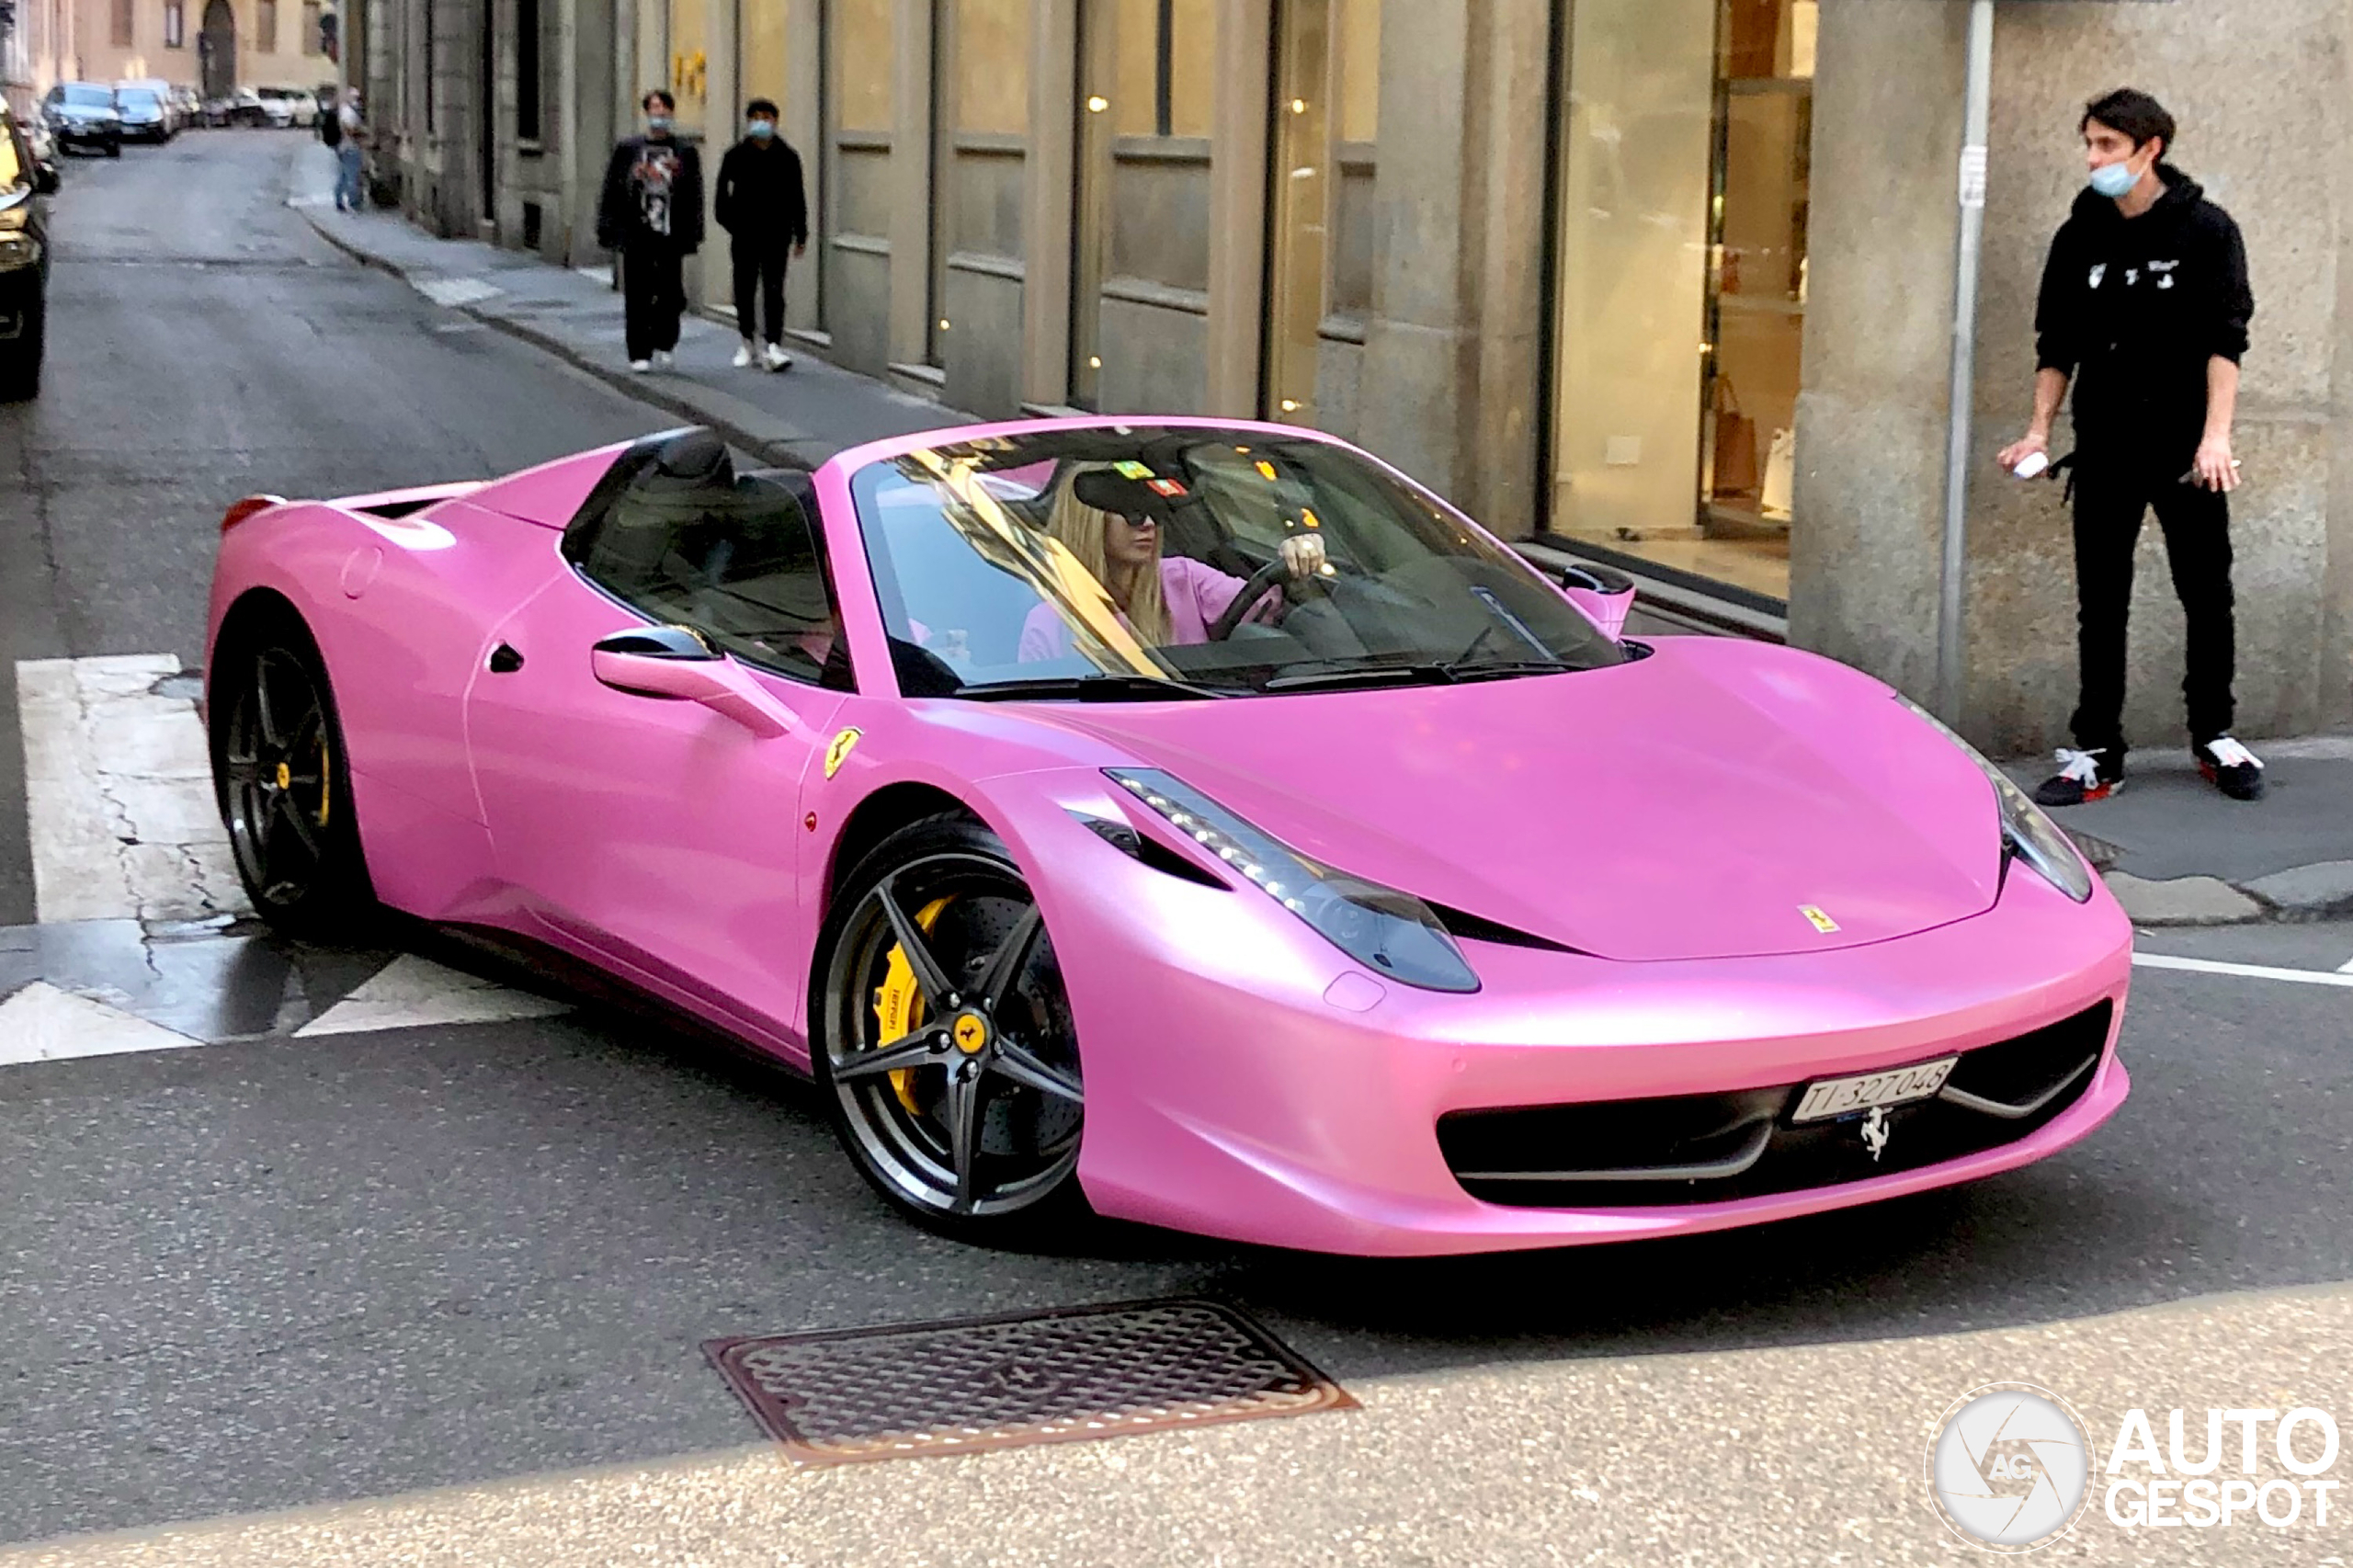 Ferrari's pink ban: A debate on customization